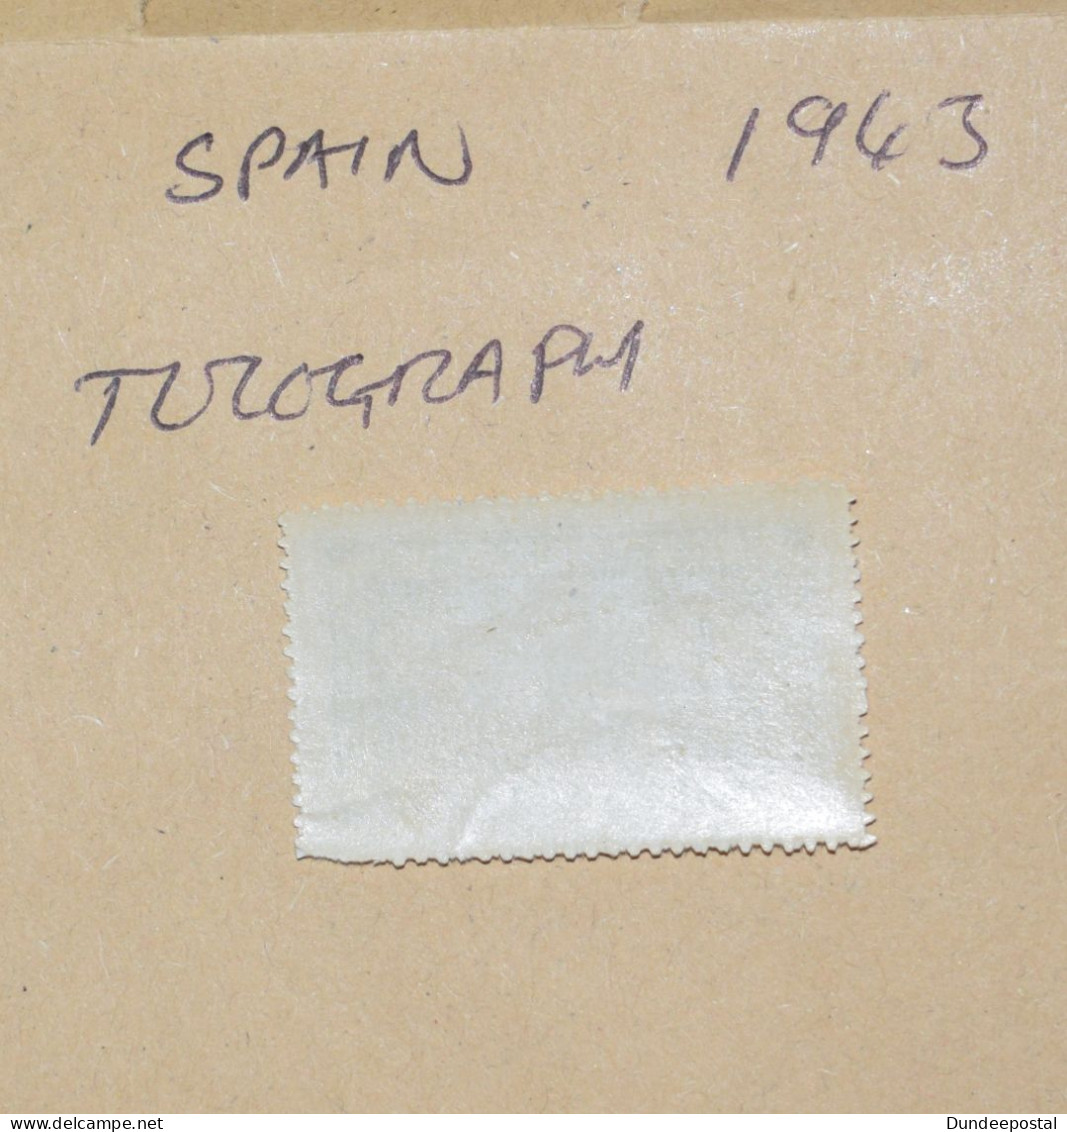 SPAIN  STAMPS  Telegraph 1943 ~~L@@K~~ - Usados